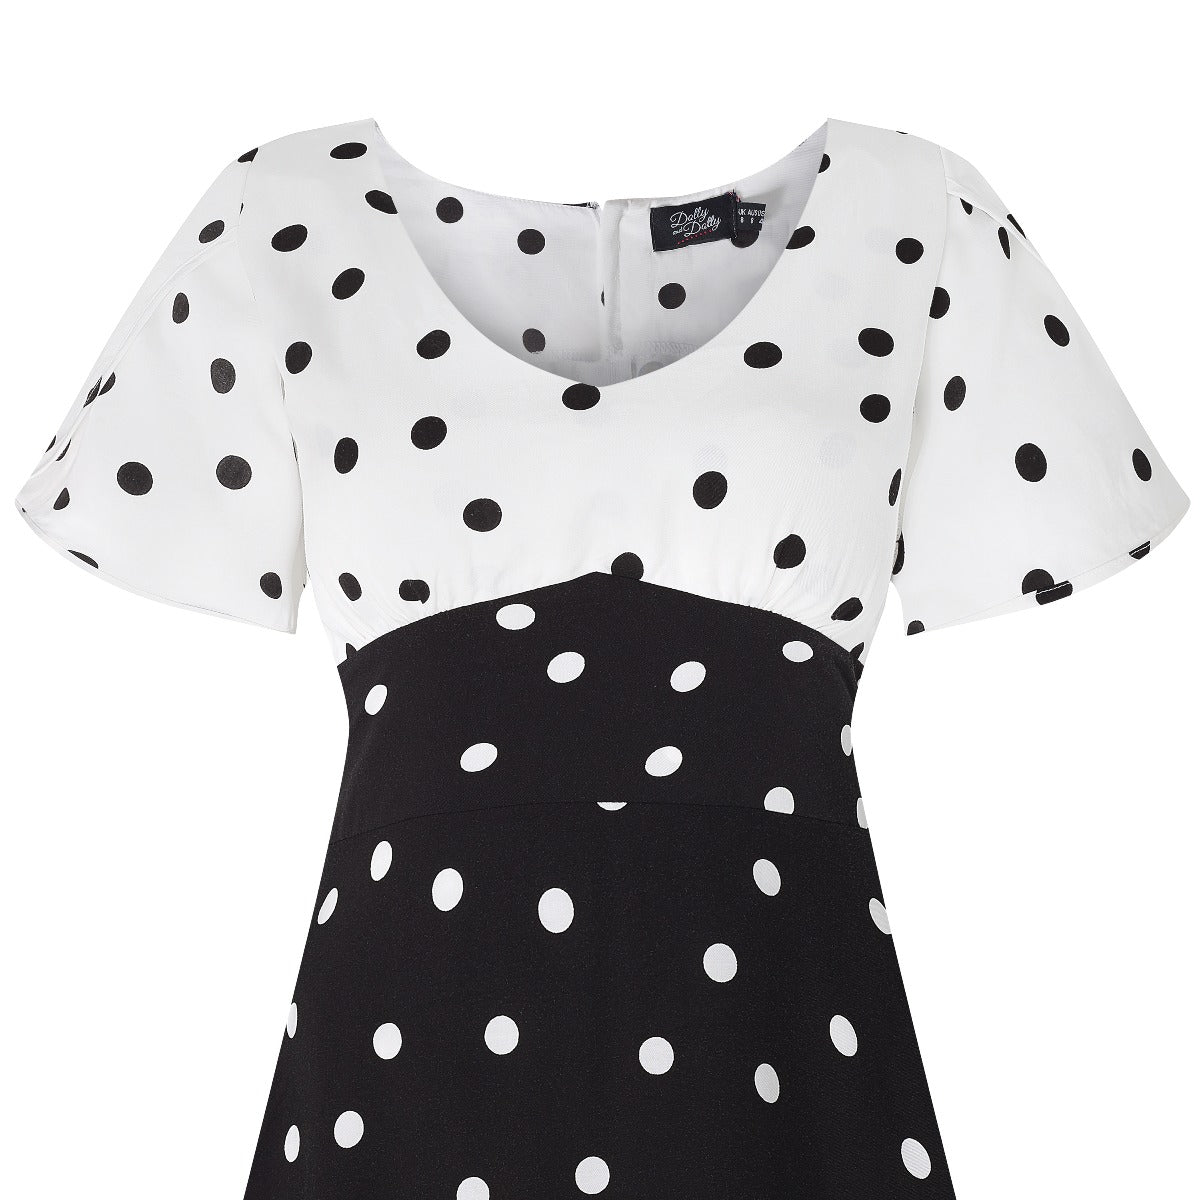 Janice Summer Dress in White and Black Polka Dot